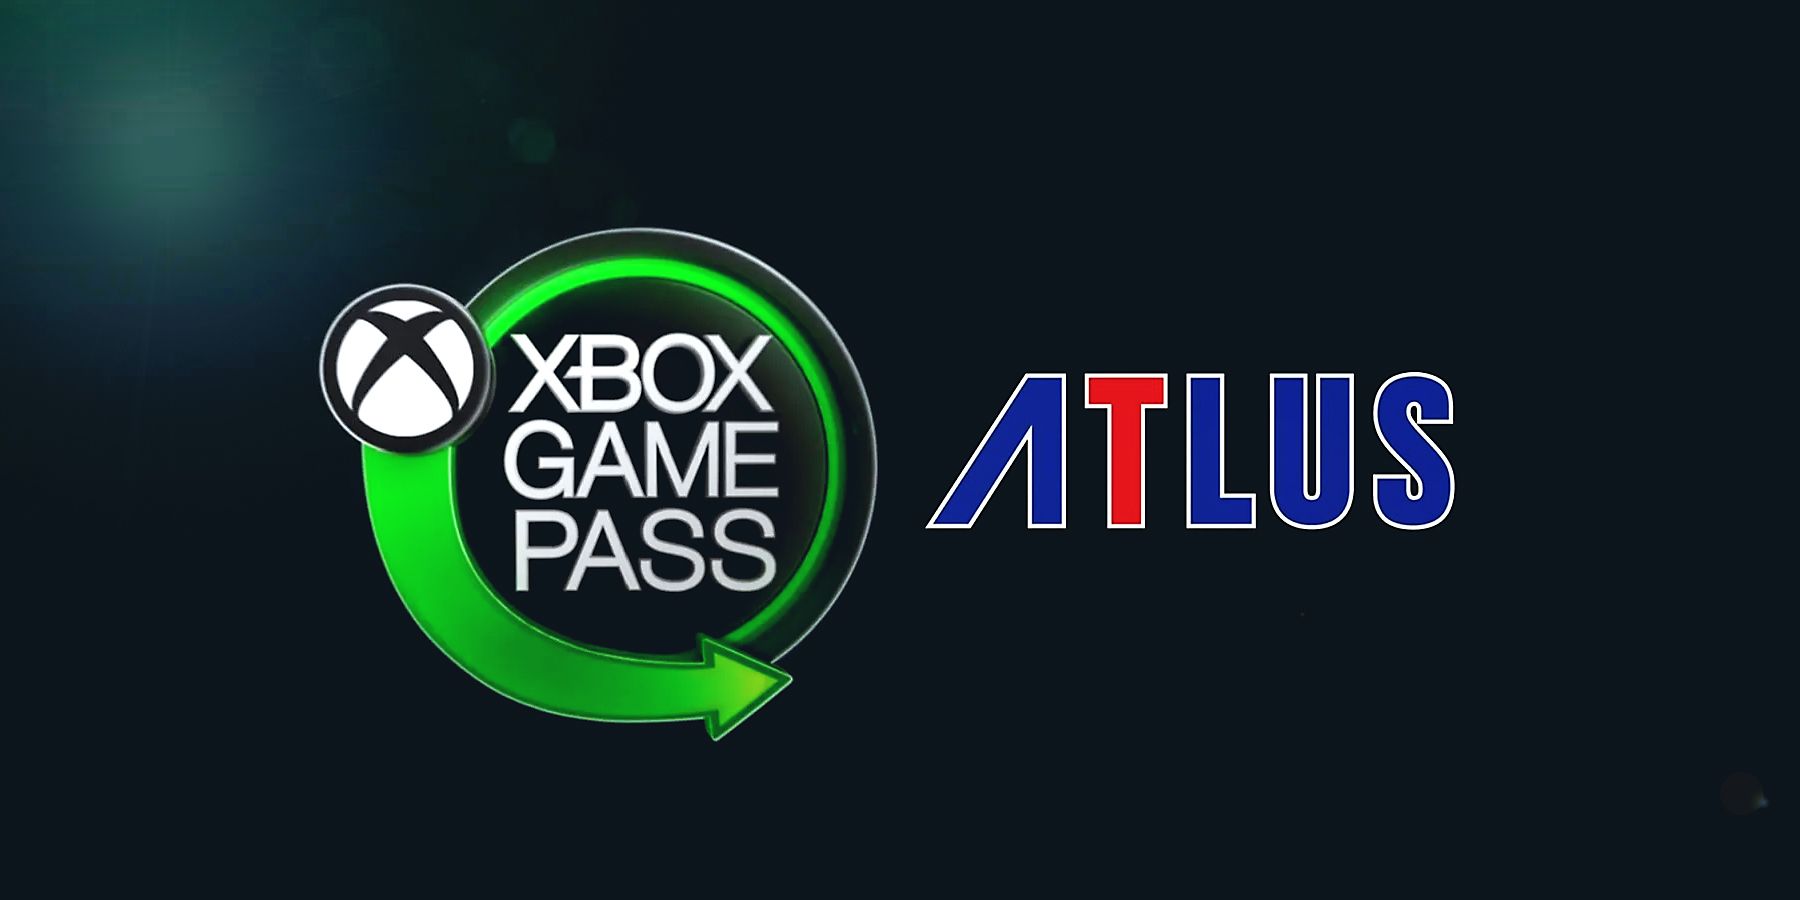 Xbox Game Pass Atlus logos dark background